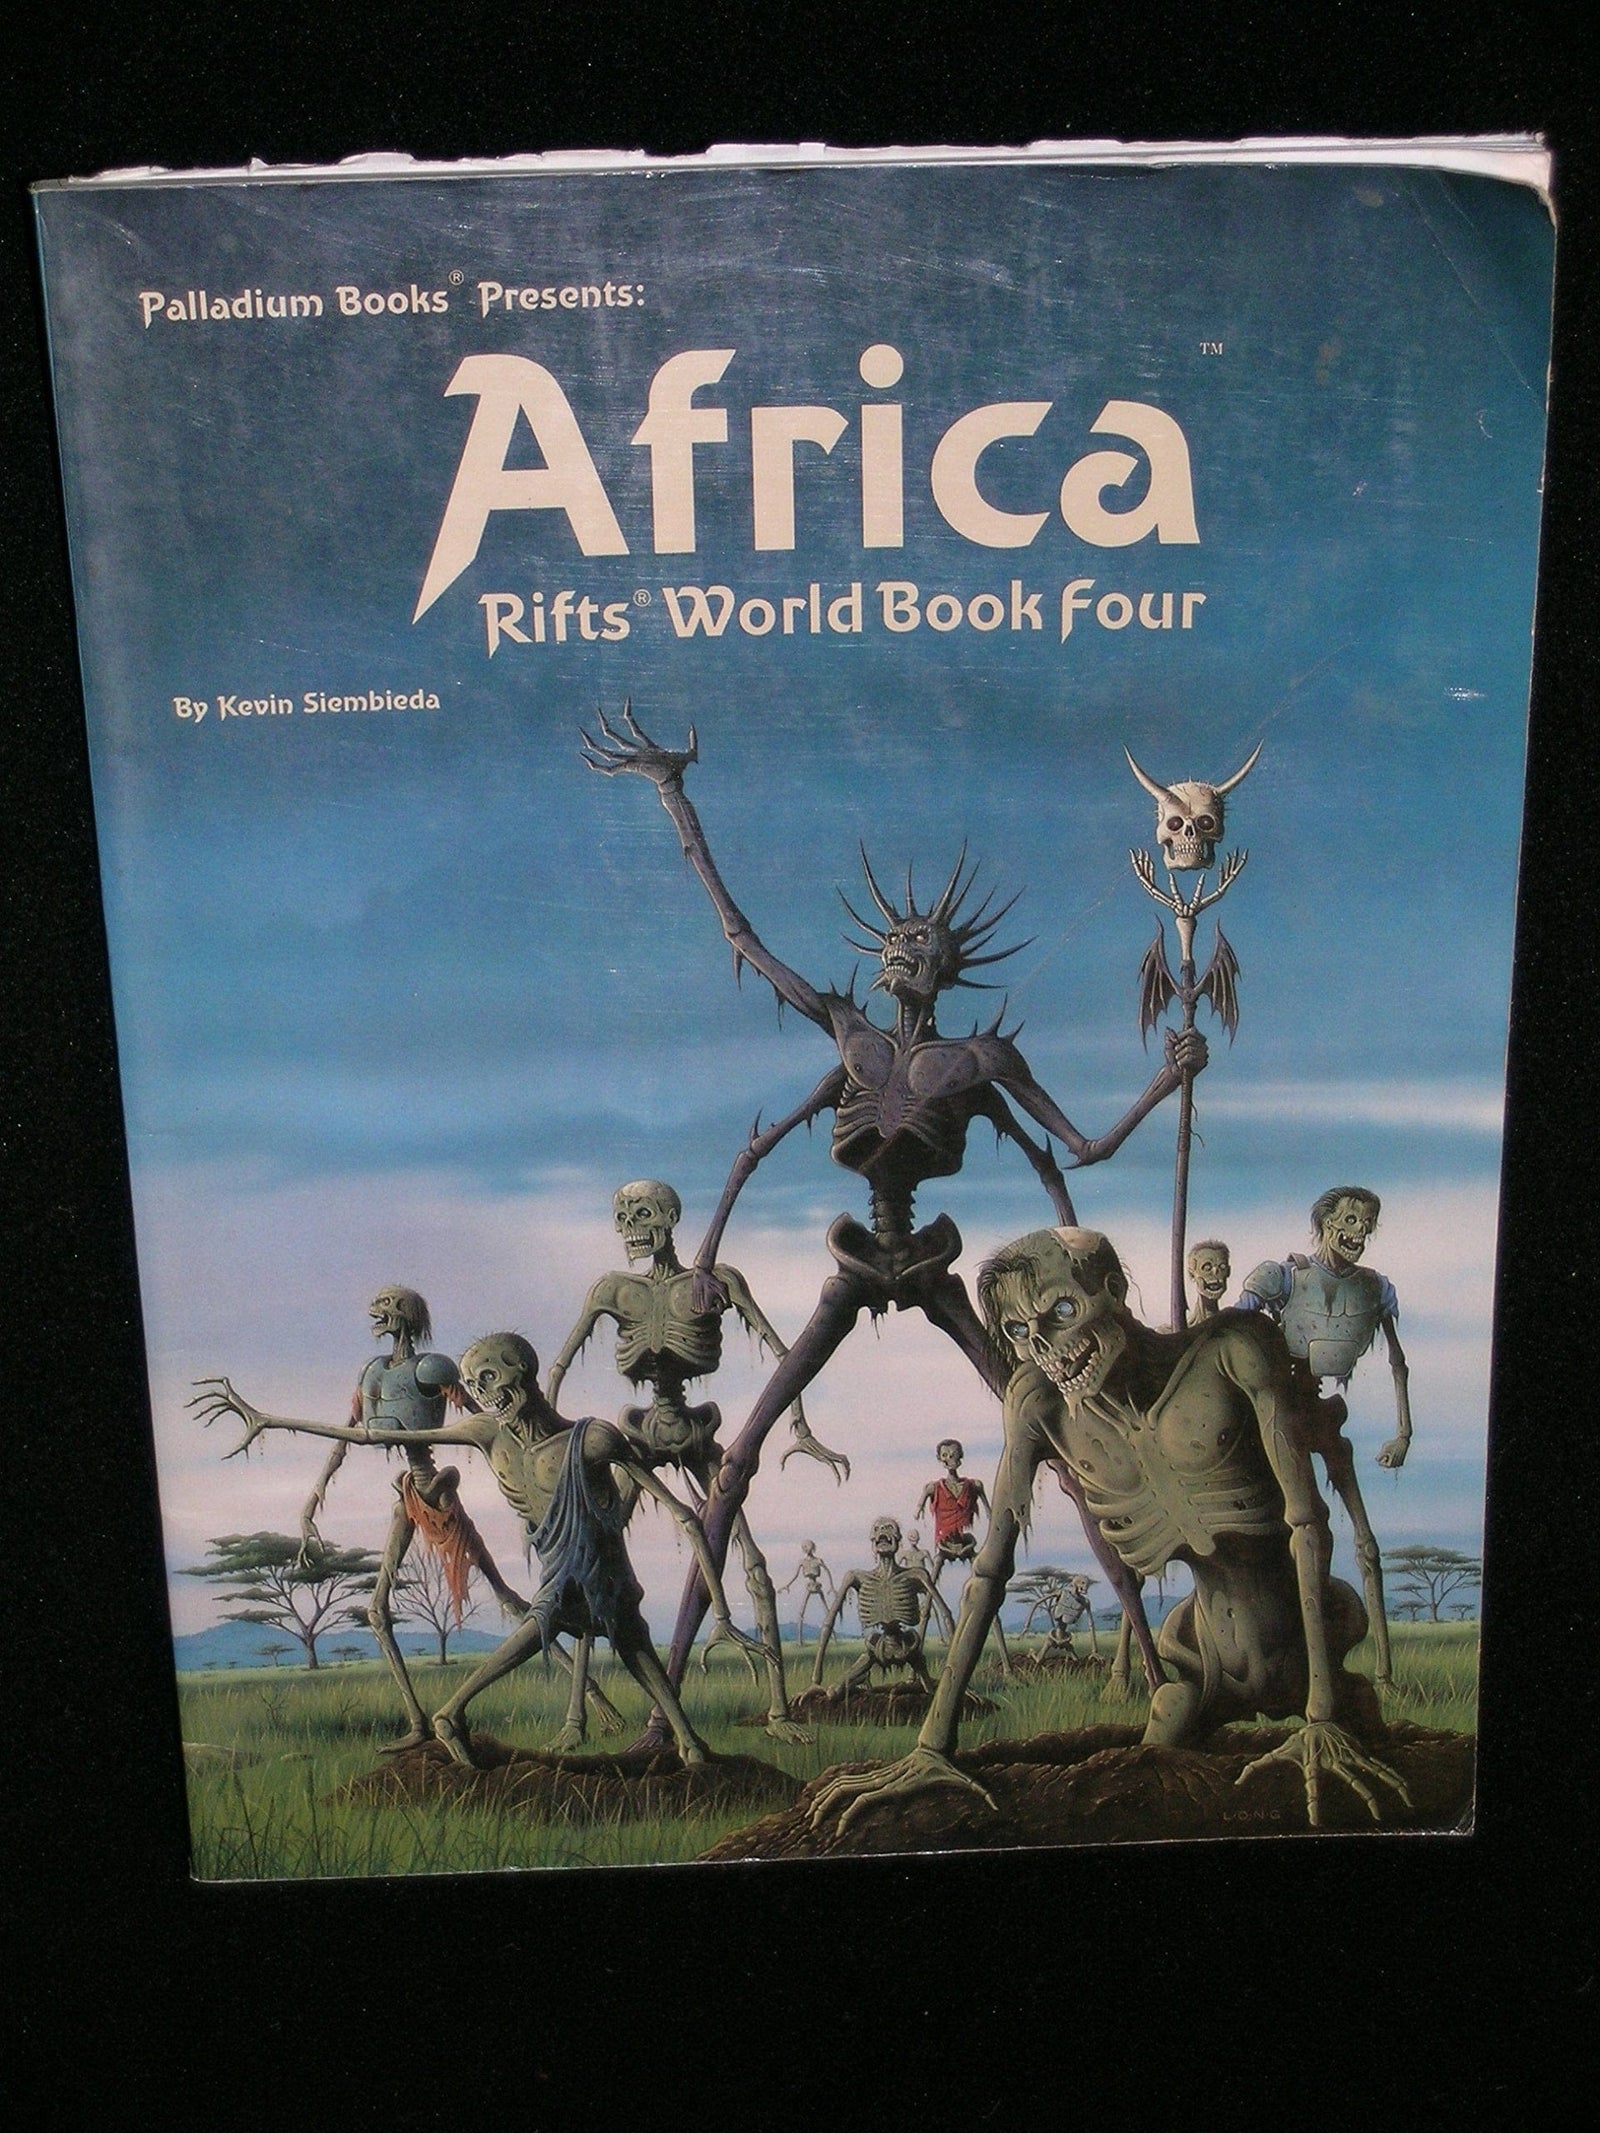 Palladium Books Role Playing Games Palladium Books Rifts RPG: World Book 4 Africa